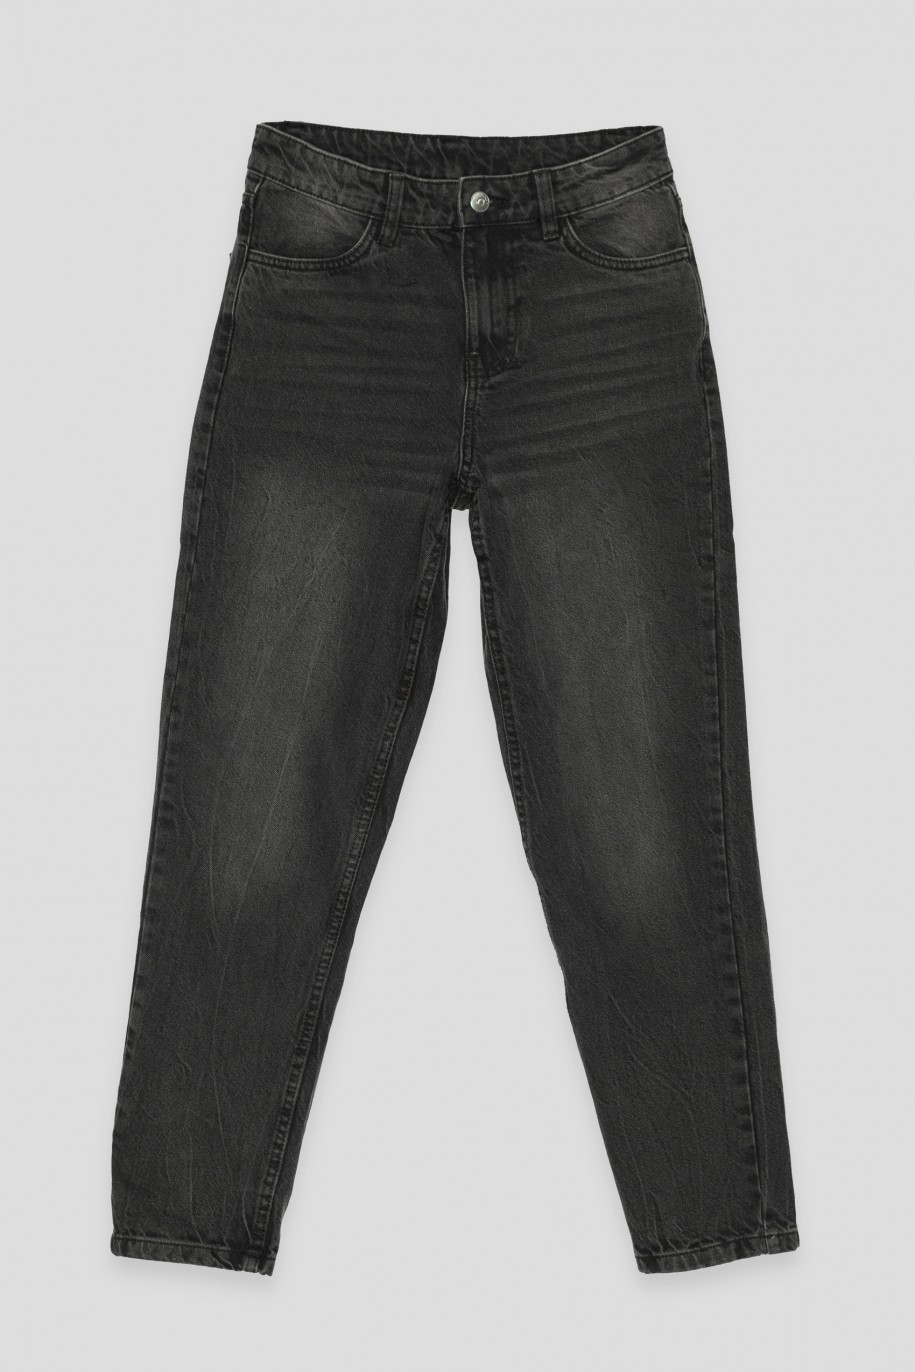 Szare jeansy typu MOM FIT - 43969